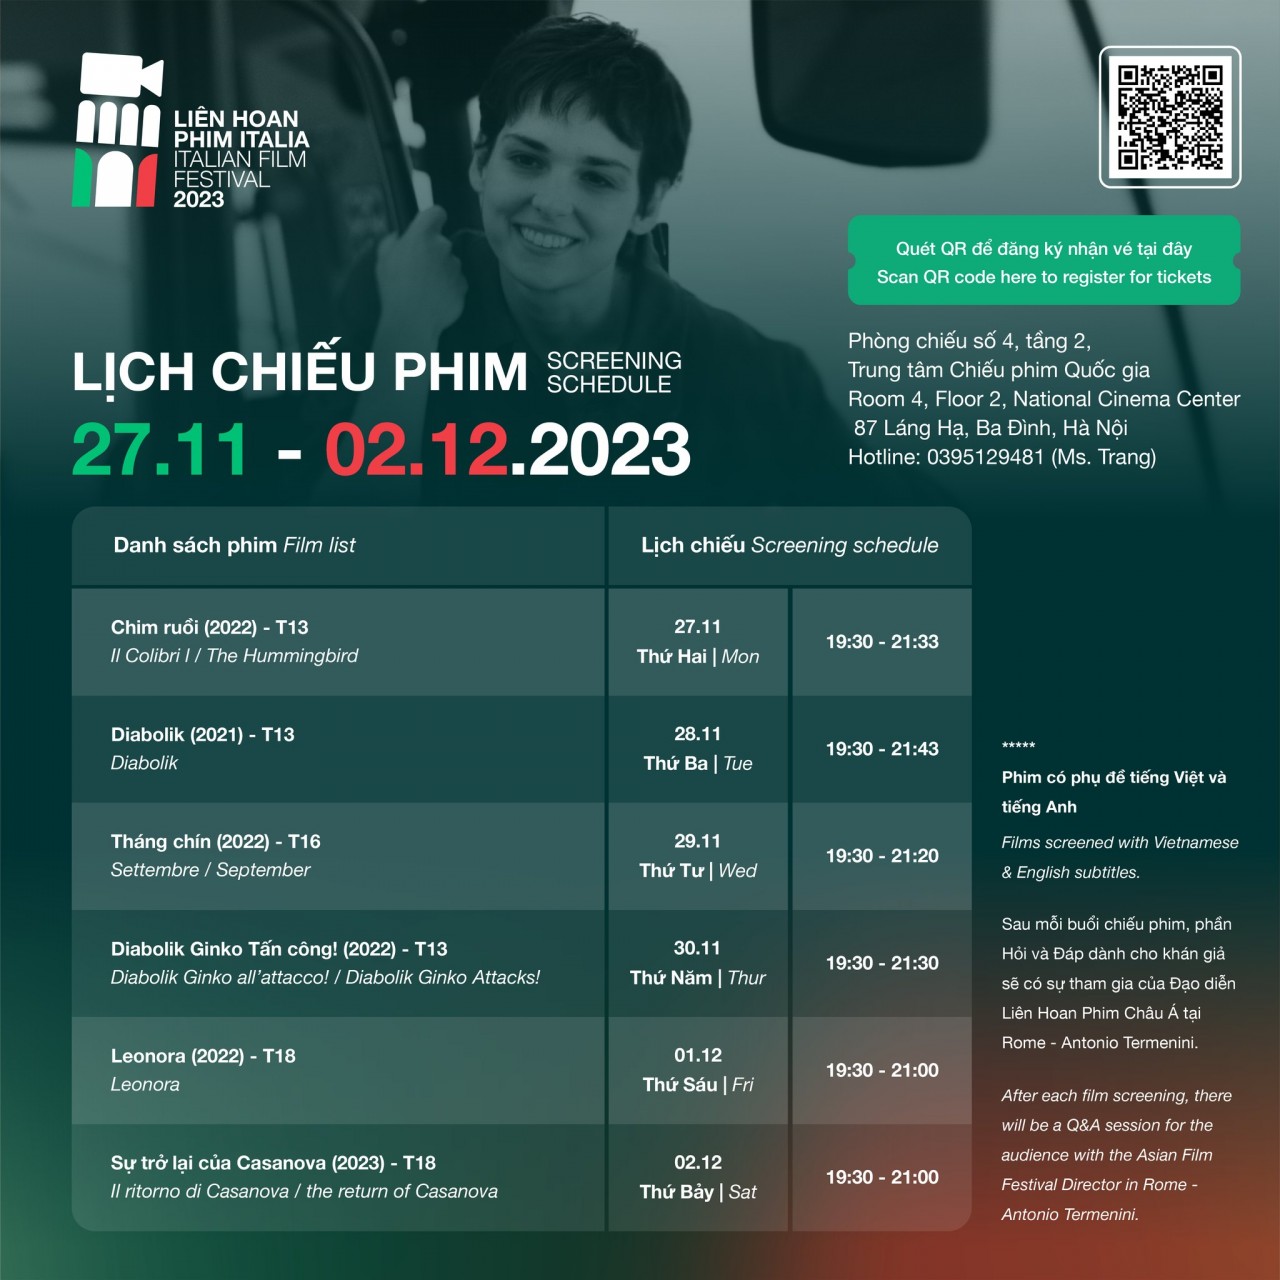 Italian Film Festival 2023 to Take Place in Hanoi Next Week